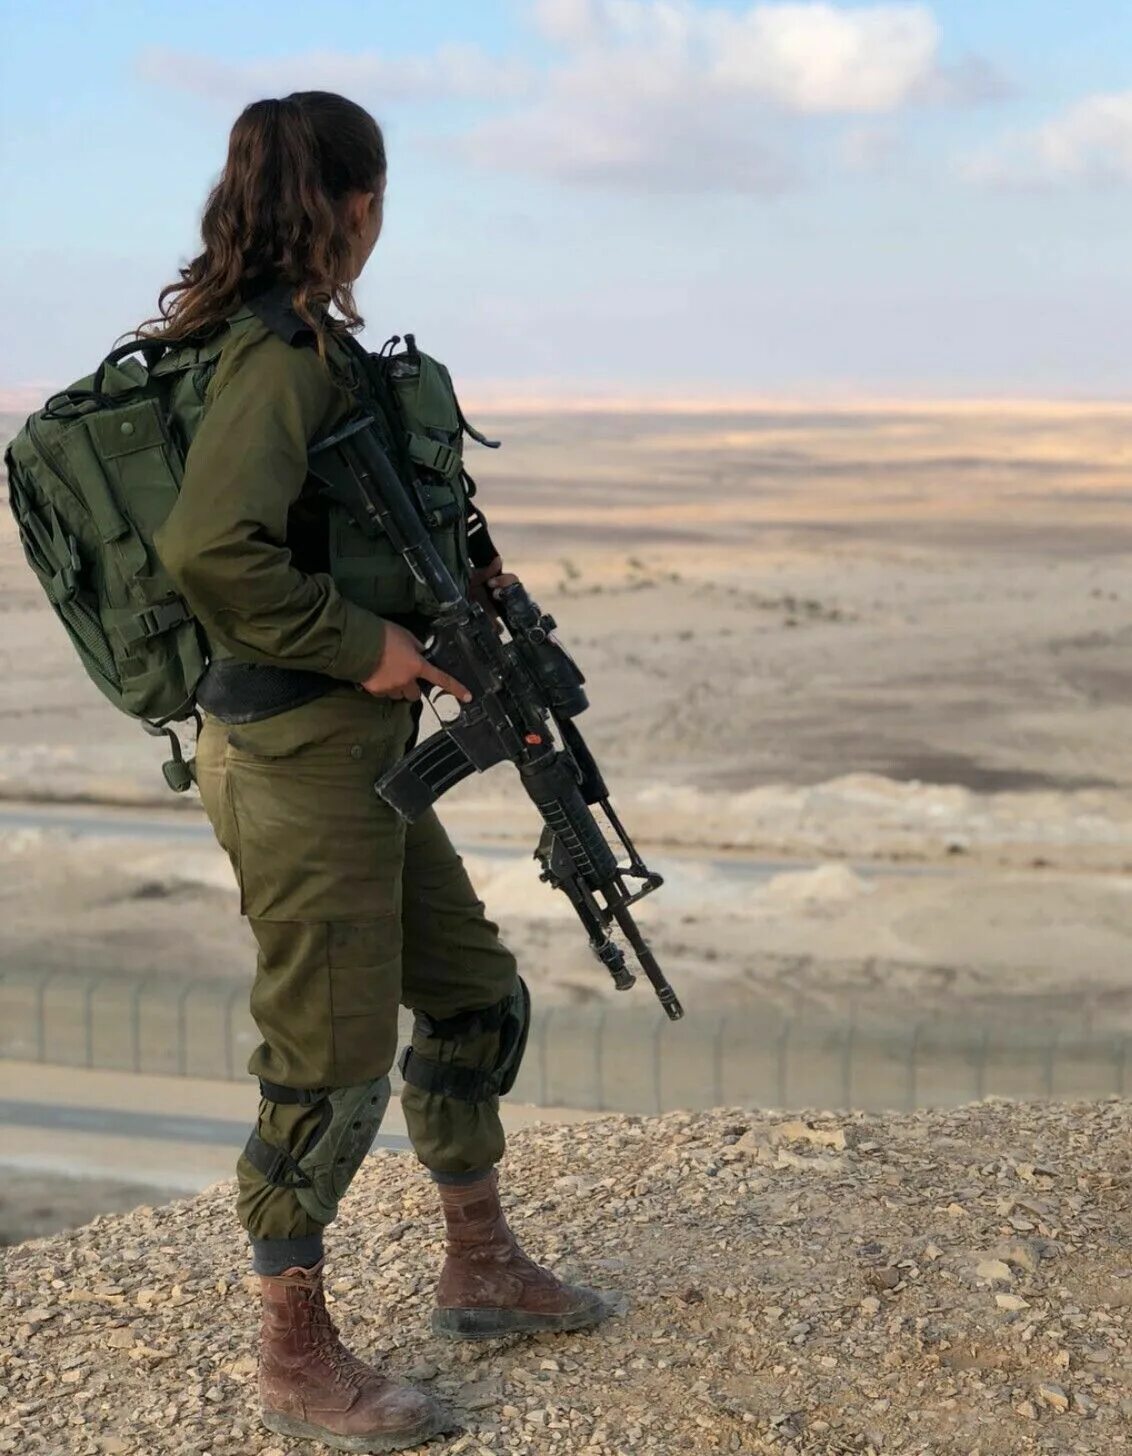 Woman defense. IDF - Israel Defense Forces - women. IDF спецназ. Девушки в тактической форме.